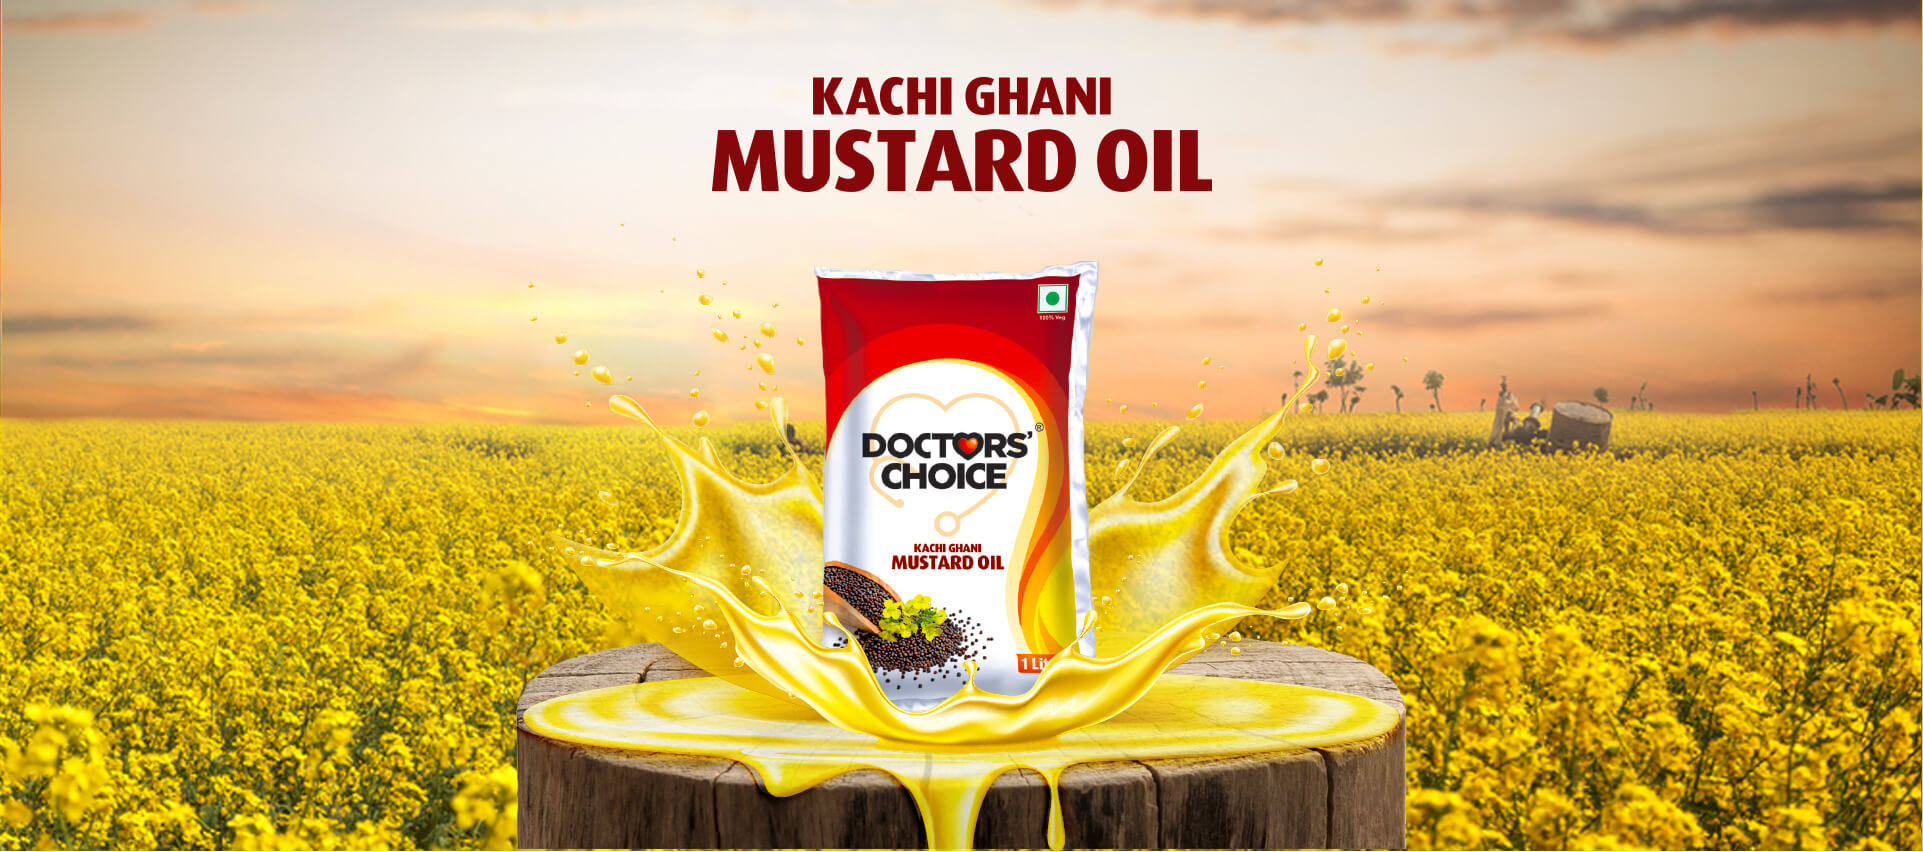 Omega-3 Rich Kachi Ghani Mustard Oil by Doctors' Choice